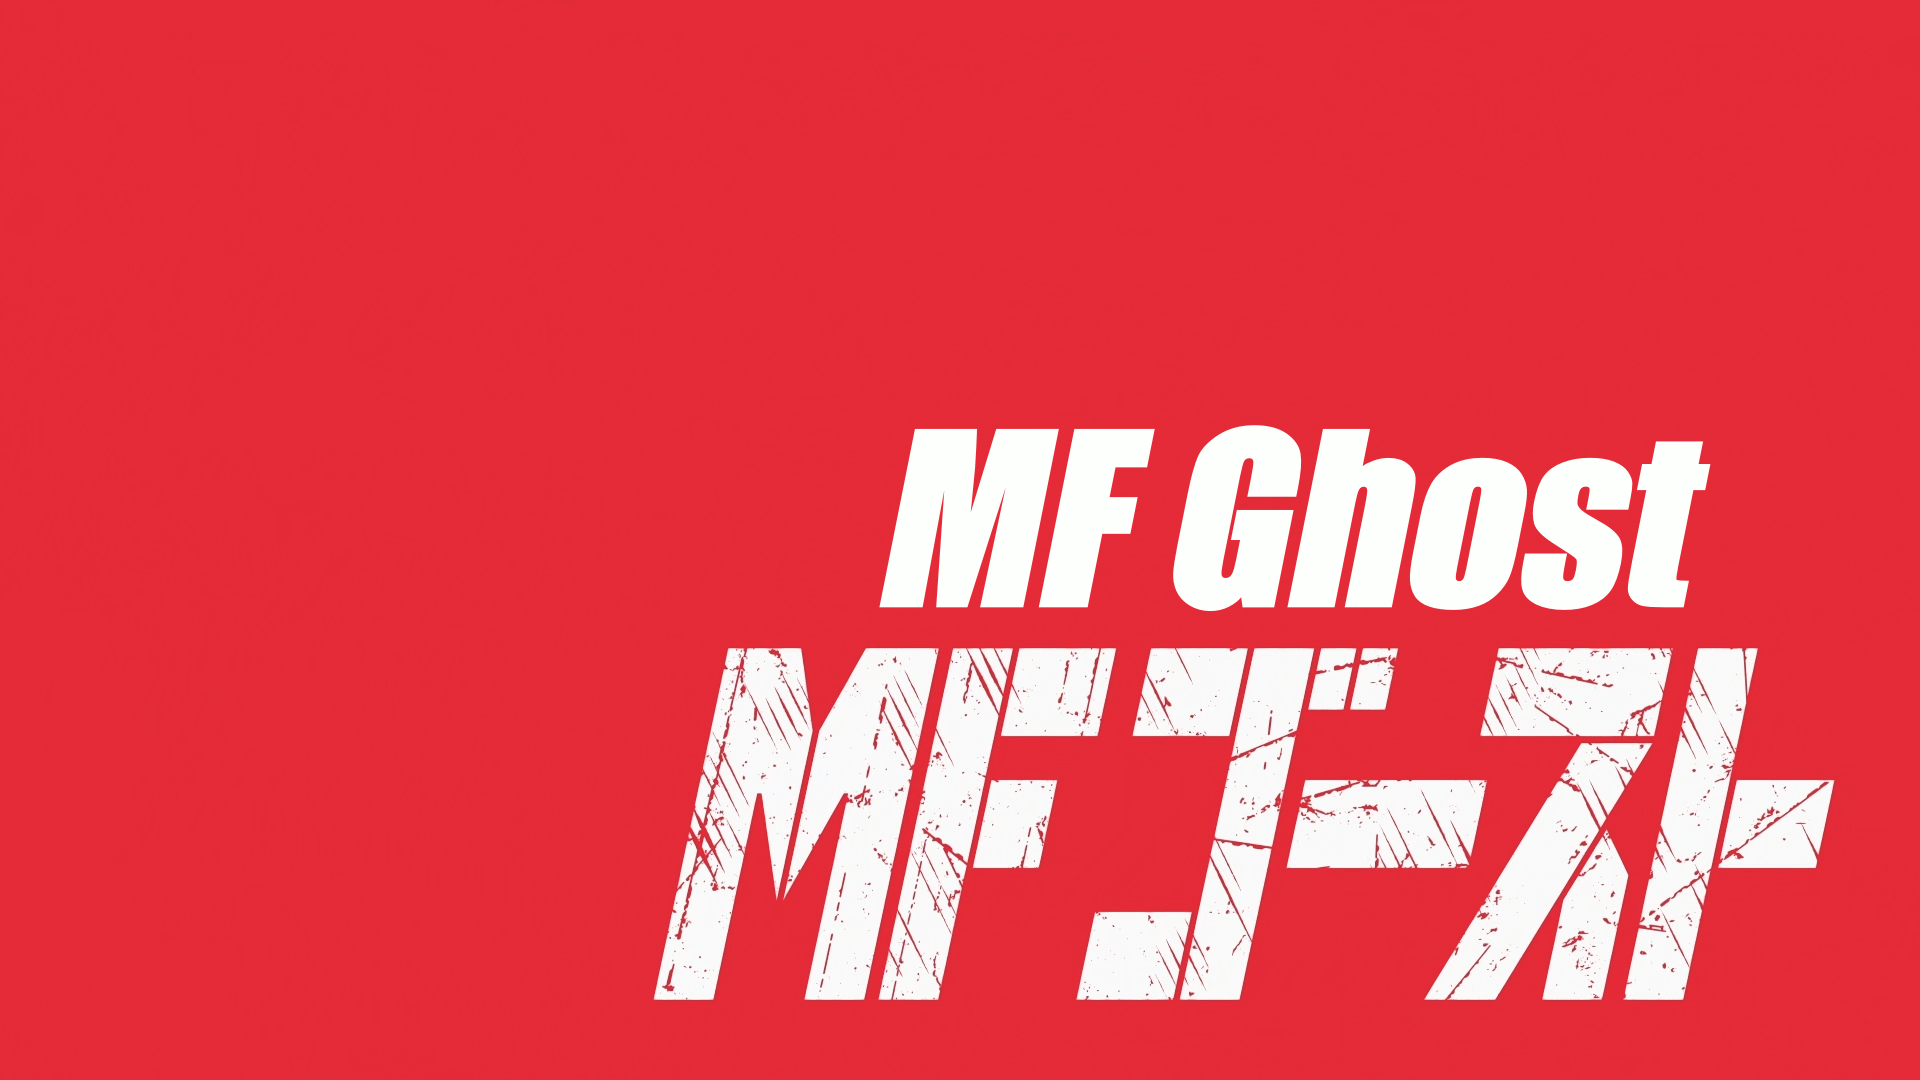 MF Ghost - Wikipedia